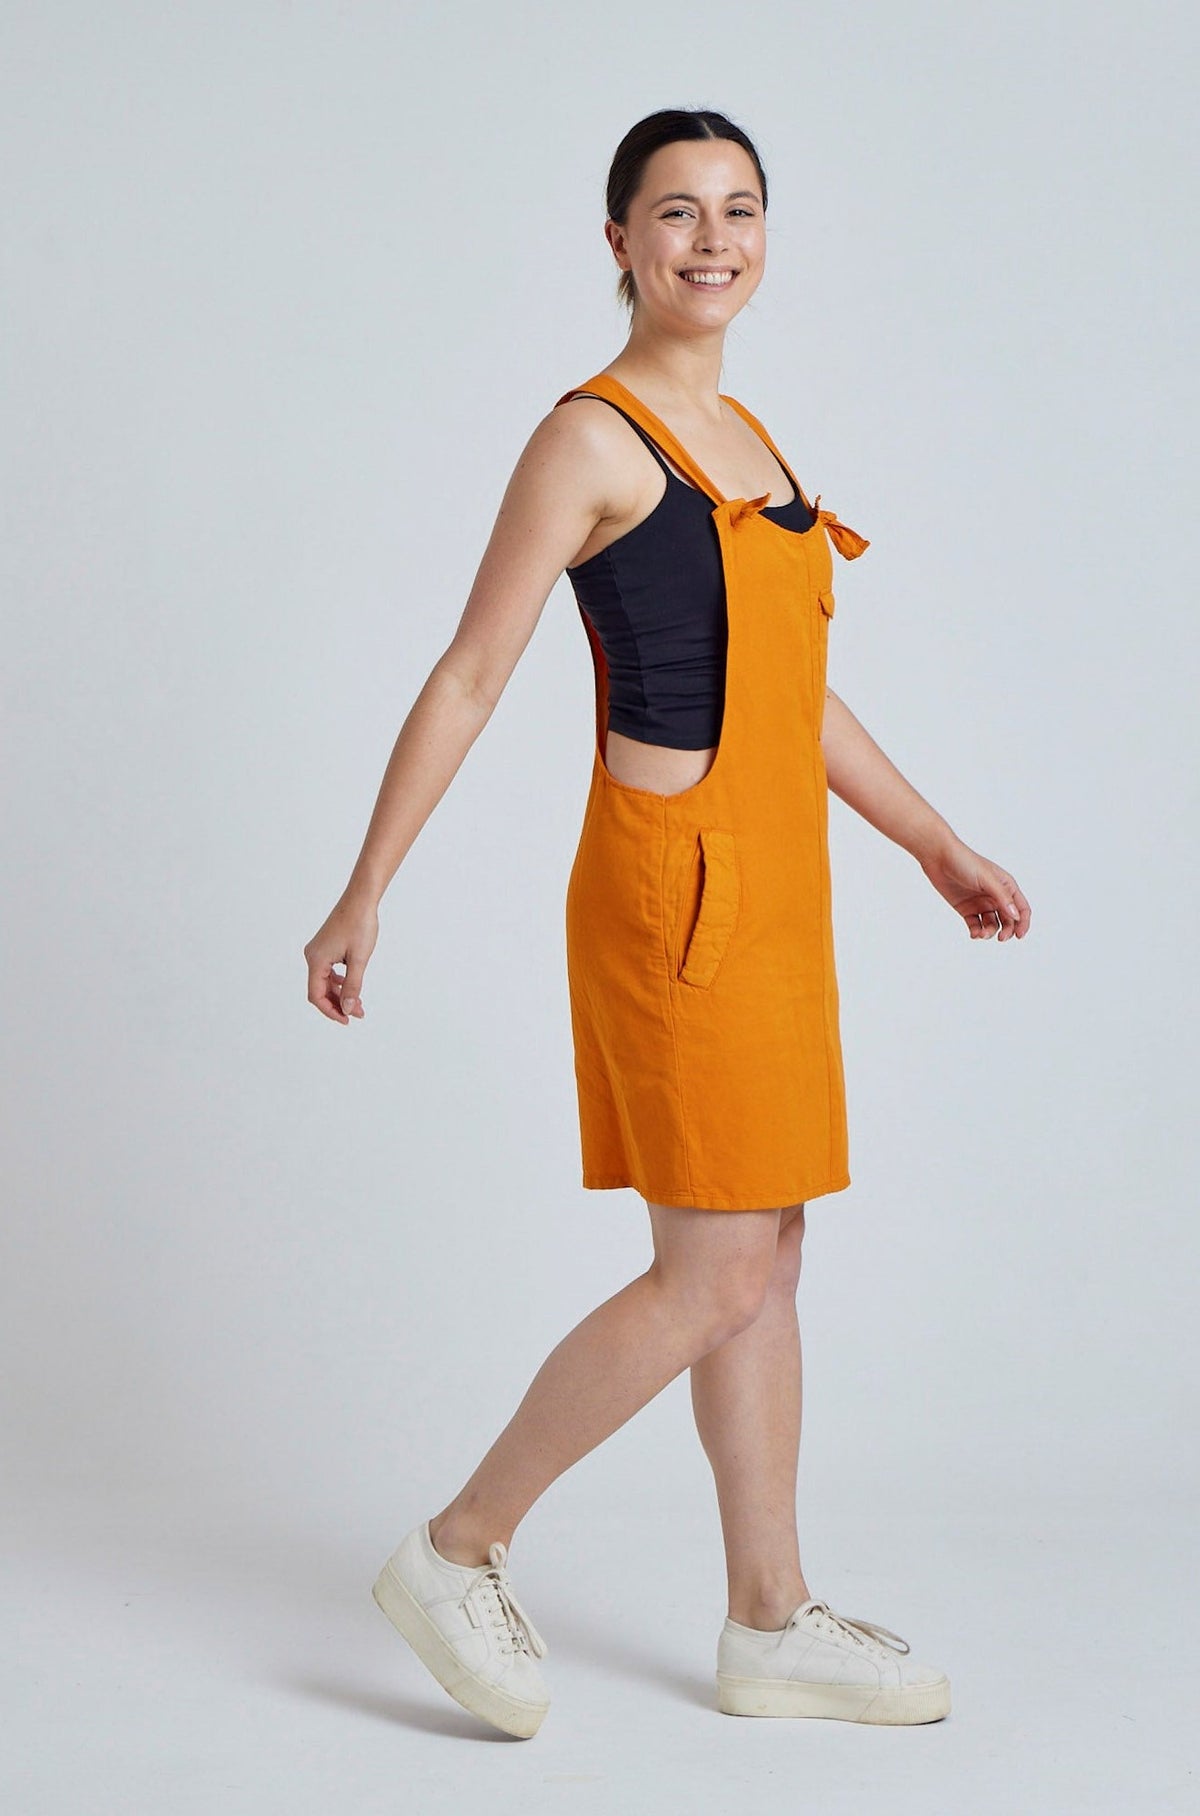 Sun Orange Peggy Pocket Dungaree Dress - GOTS Certified Organic Cotton and Linen